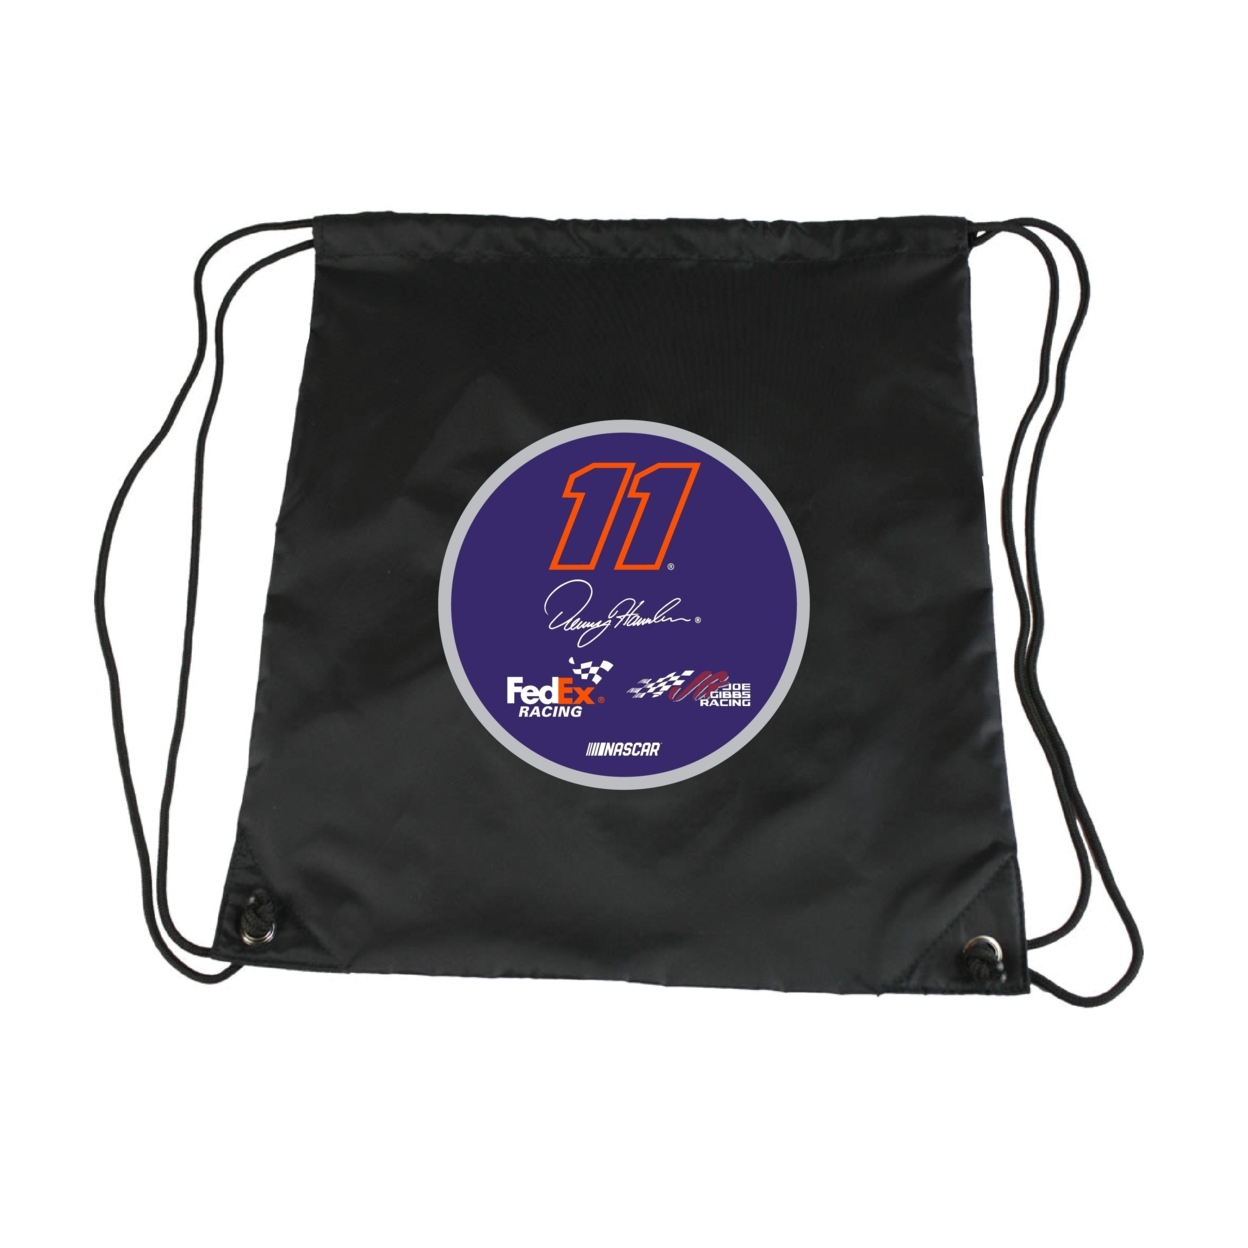 Denny Hamlin #11 Nascar Cinch Bag NEW FOR 2020